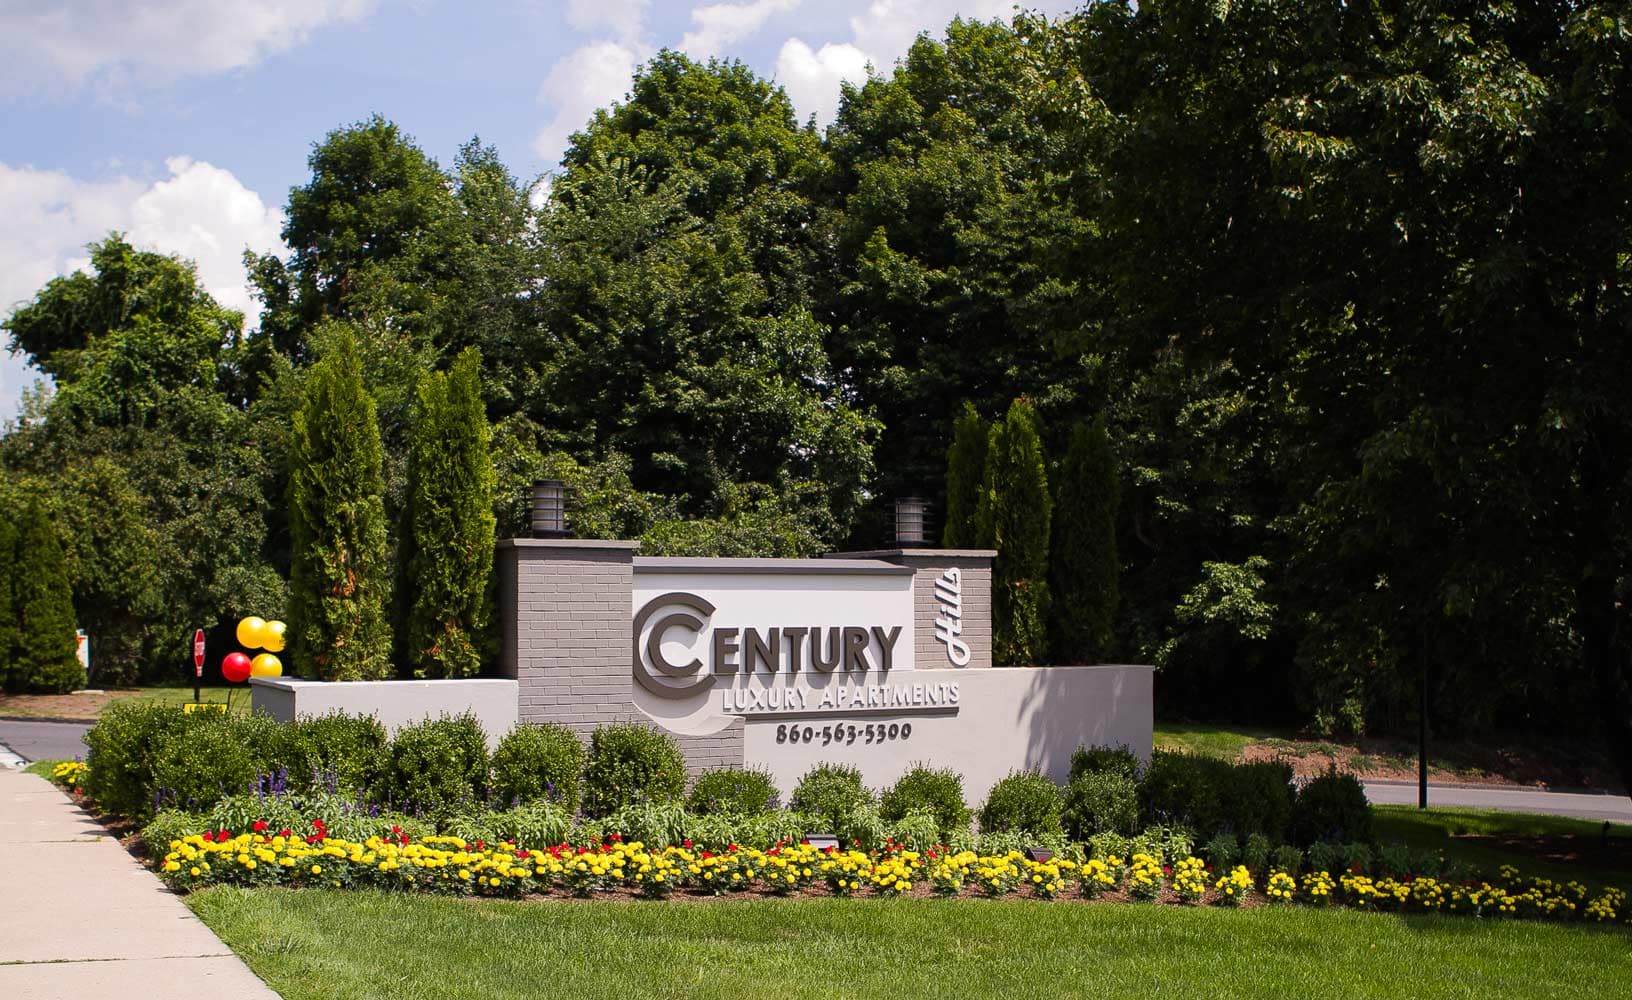 Century Hills luxury apartments signage